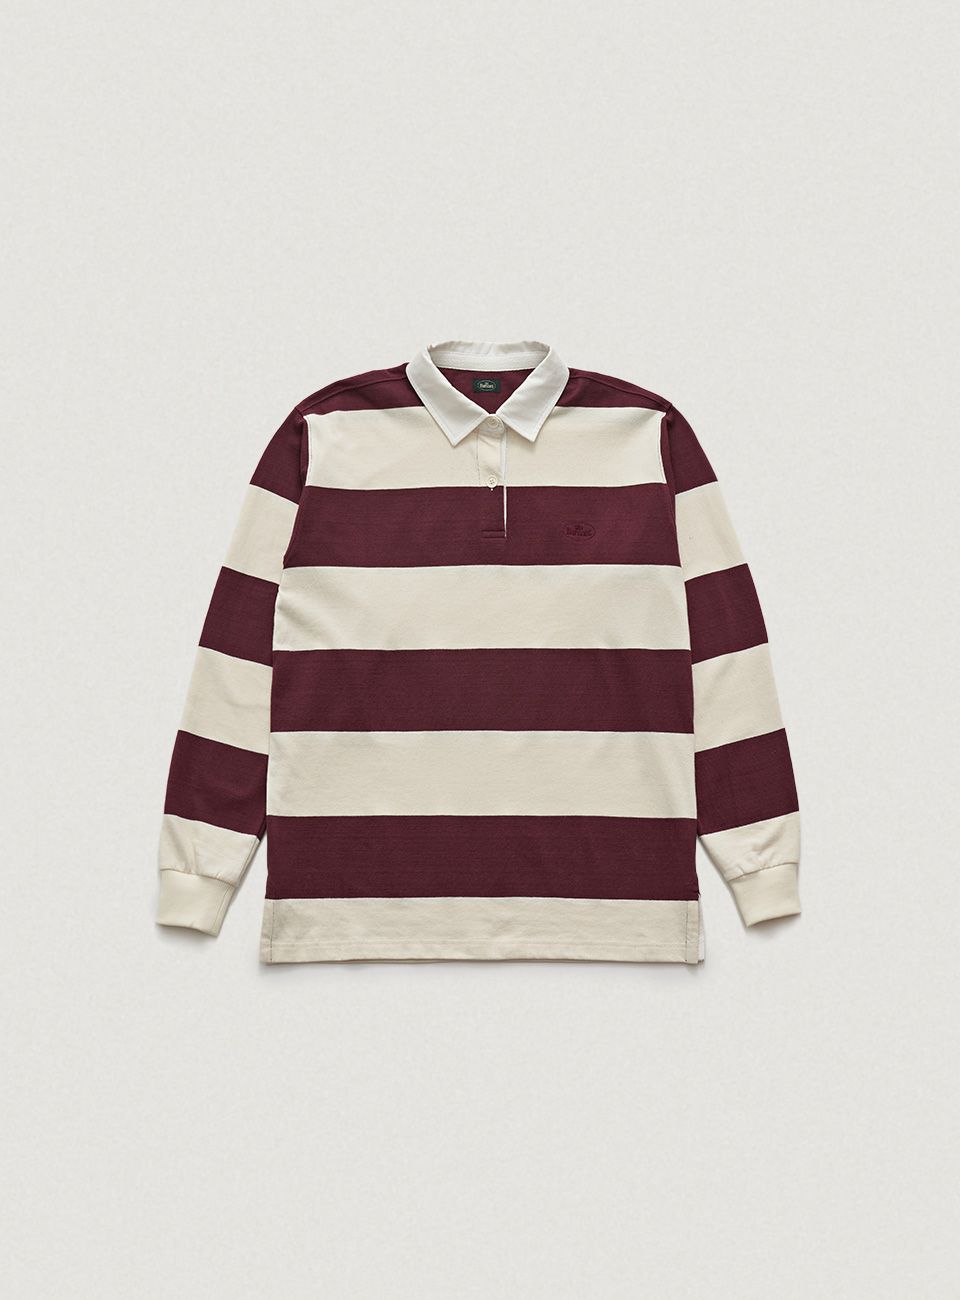 Burgundy Classic Striped Rugby Shirt